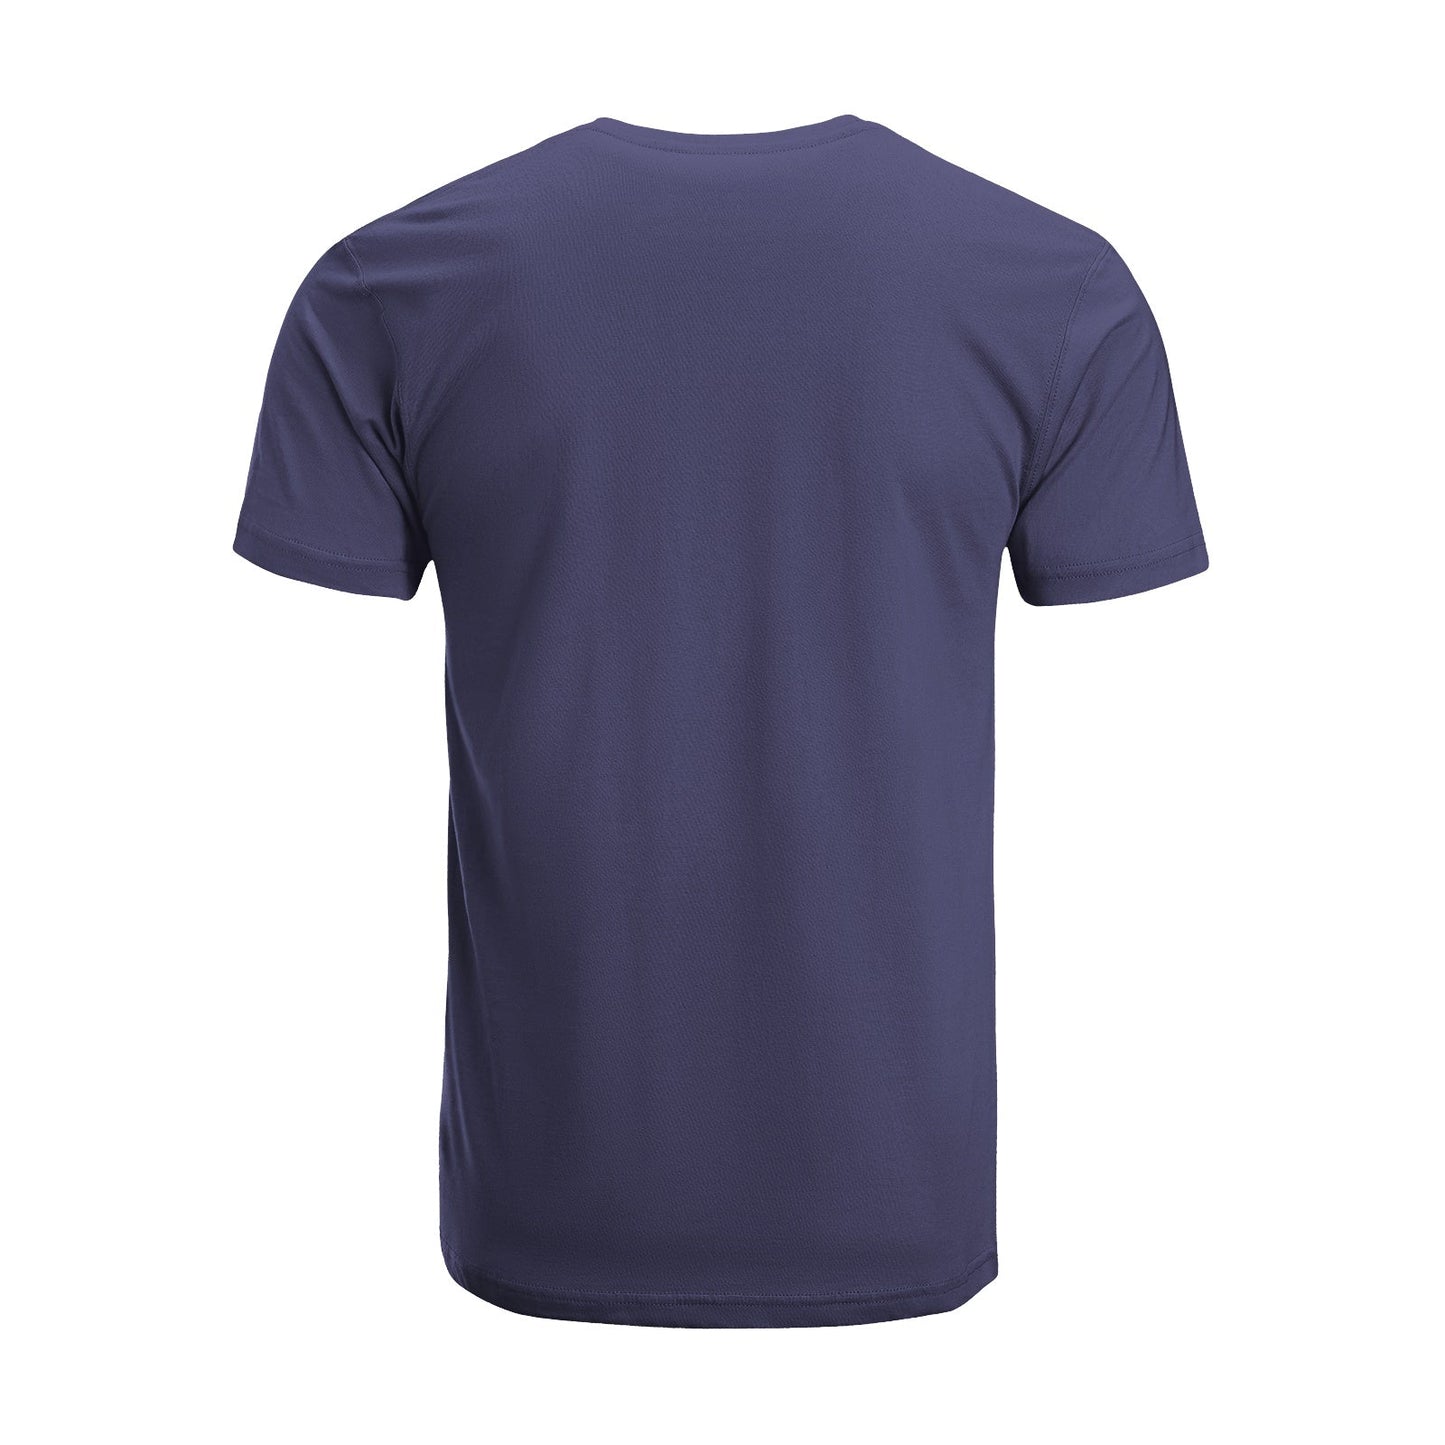 Unisex Short Sleeve Crew Neck Cotton Jersey T-Shirt MOM 14